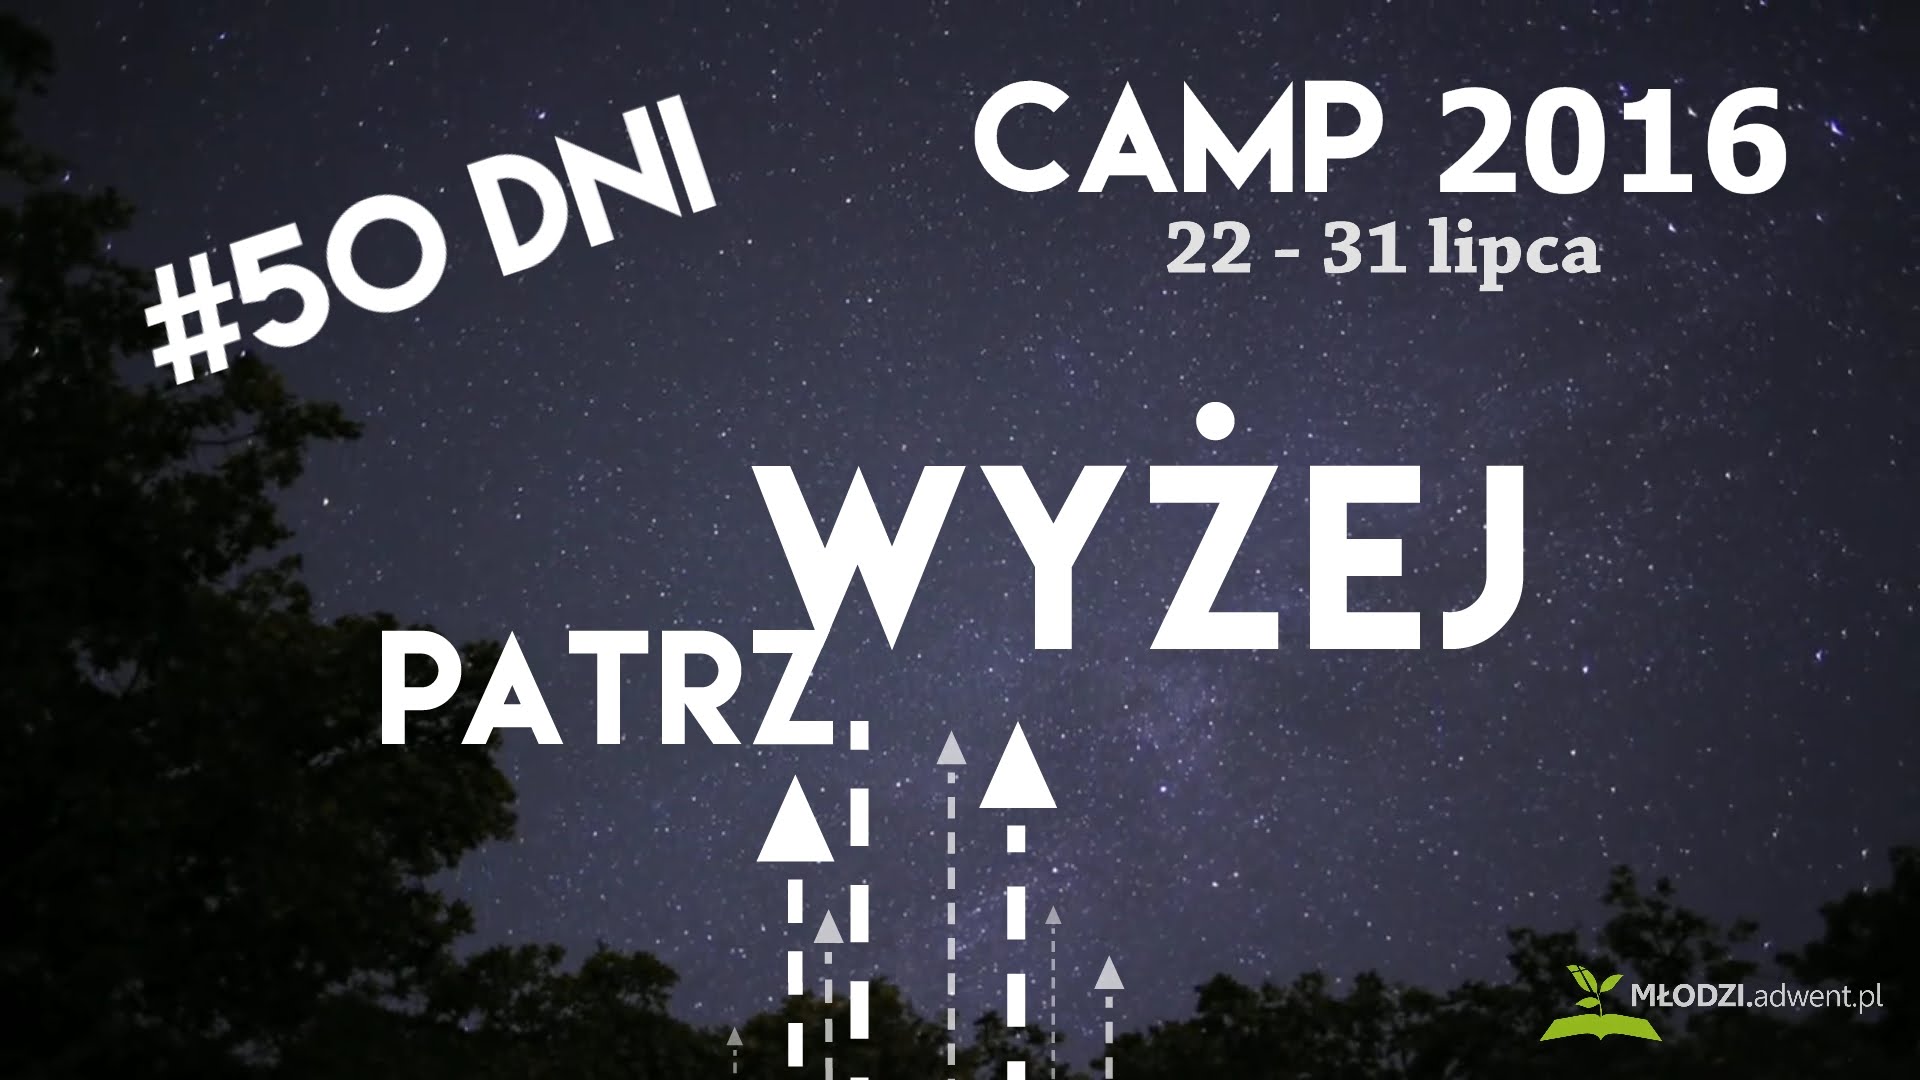 Camp 2016